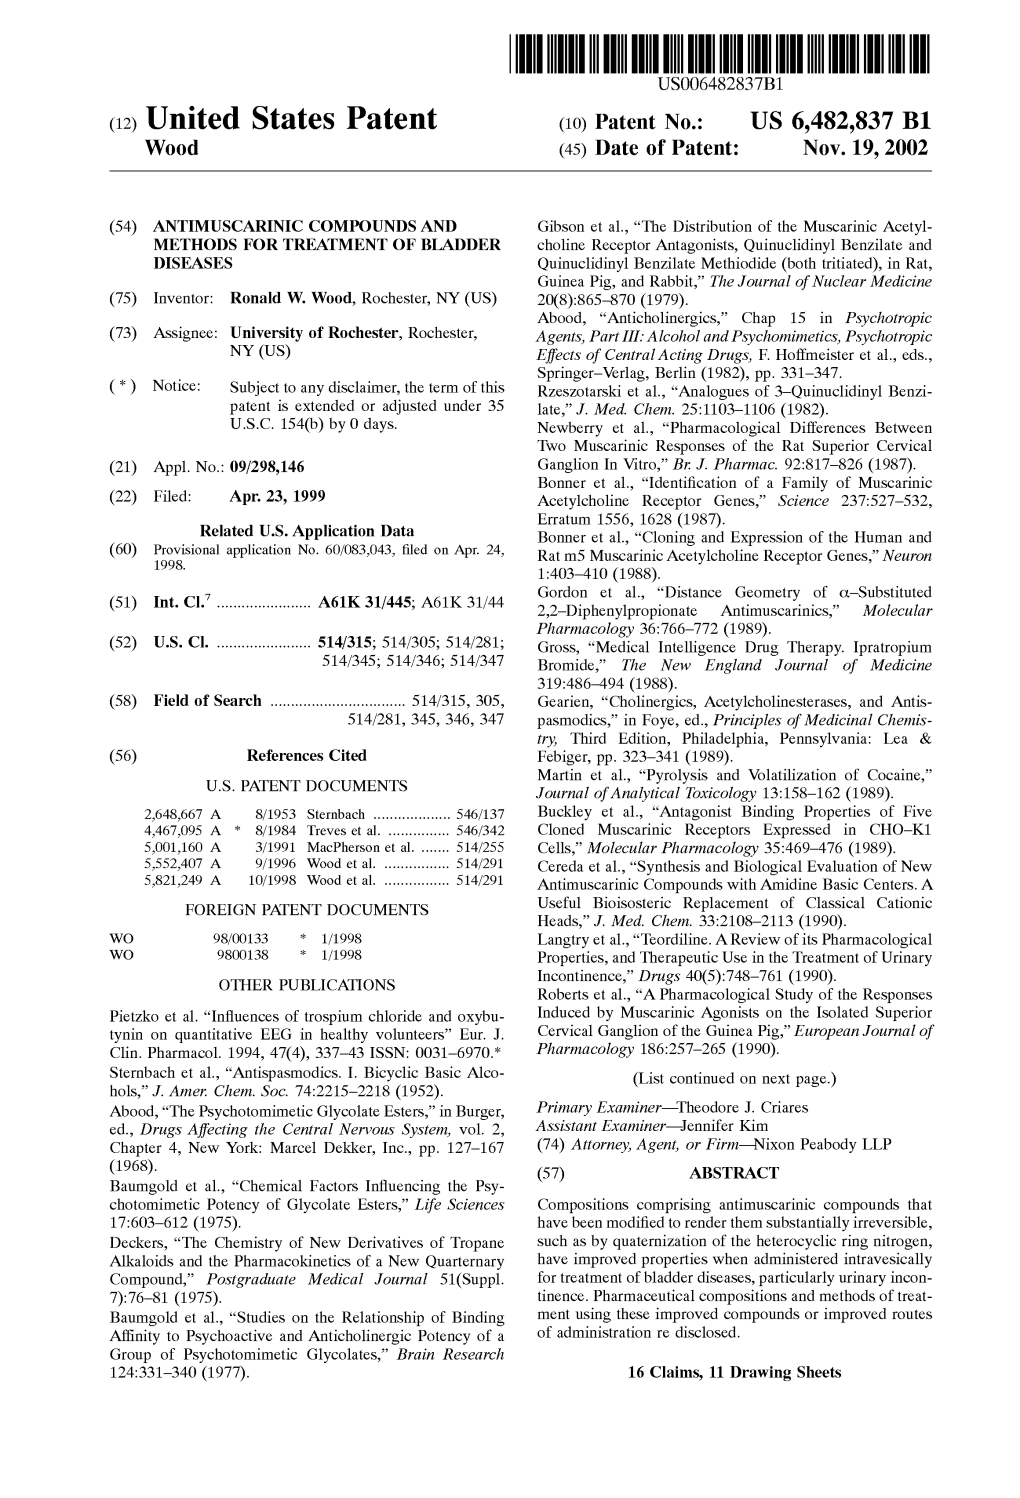 (12) United States Patent (10) Patent No.: US 6,482,837 B1 Wood (45) Date of Patent: Nov